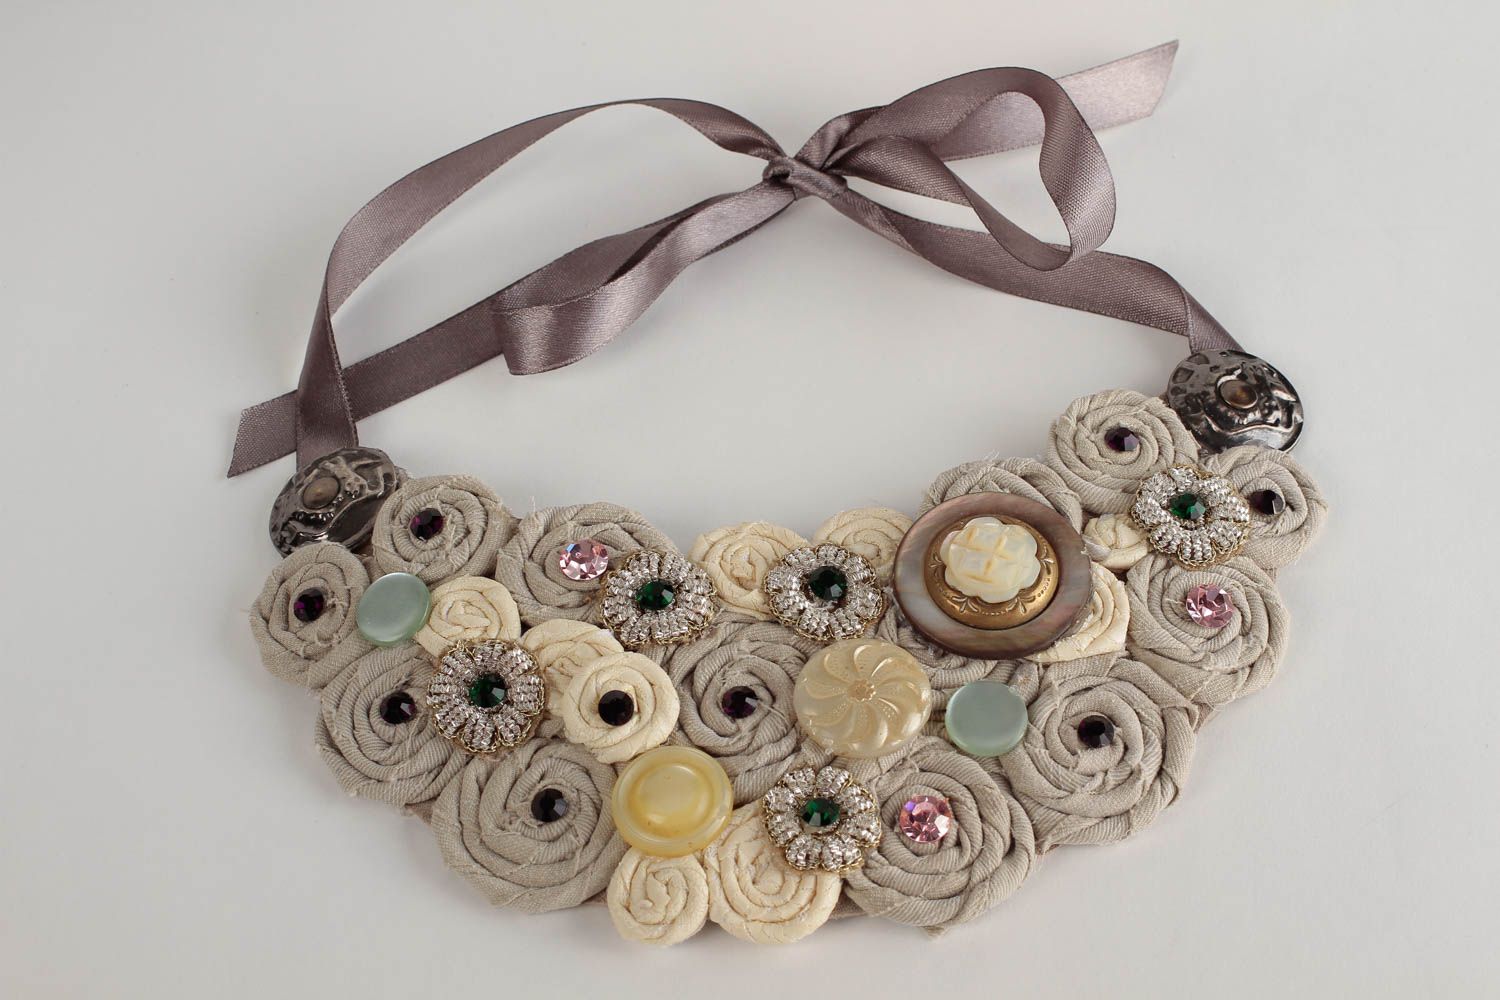 Handmade textile necklace design handmade jewellery neck accessories for girls photo 3